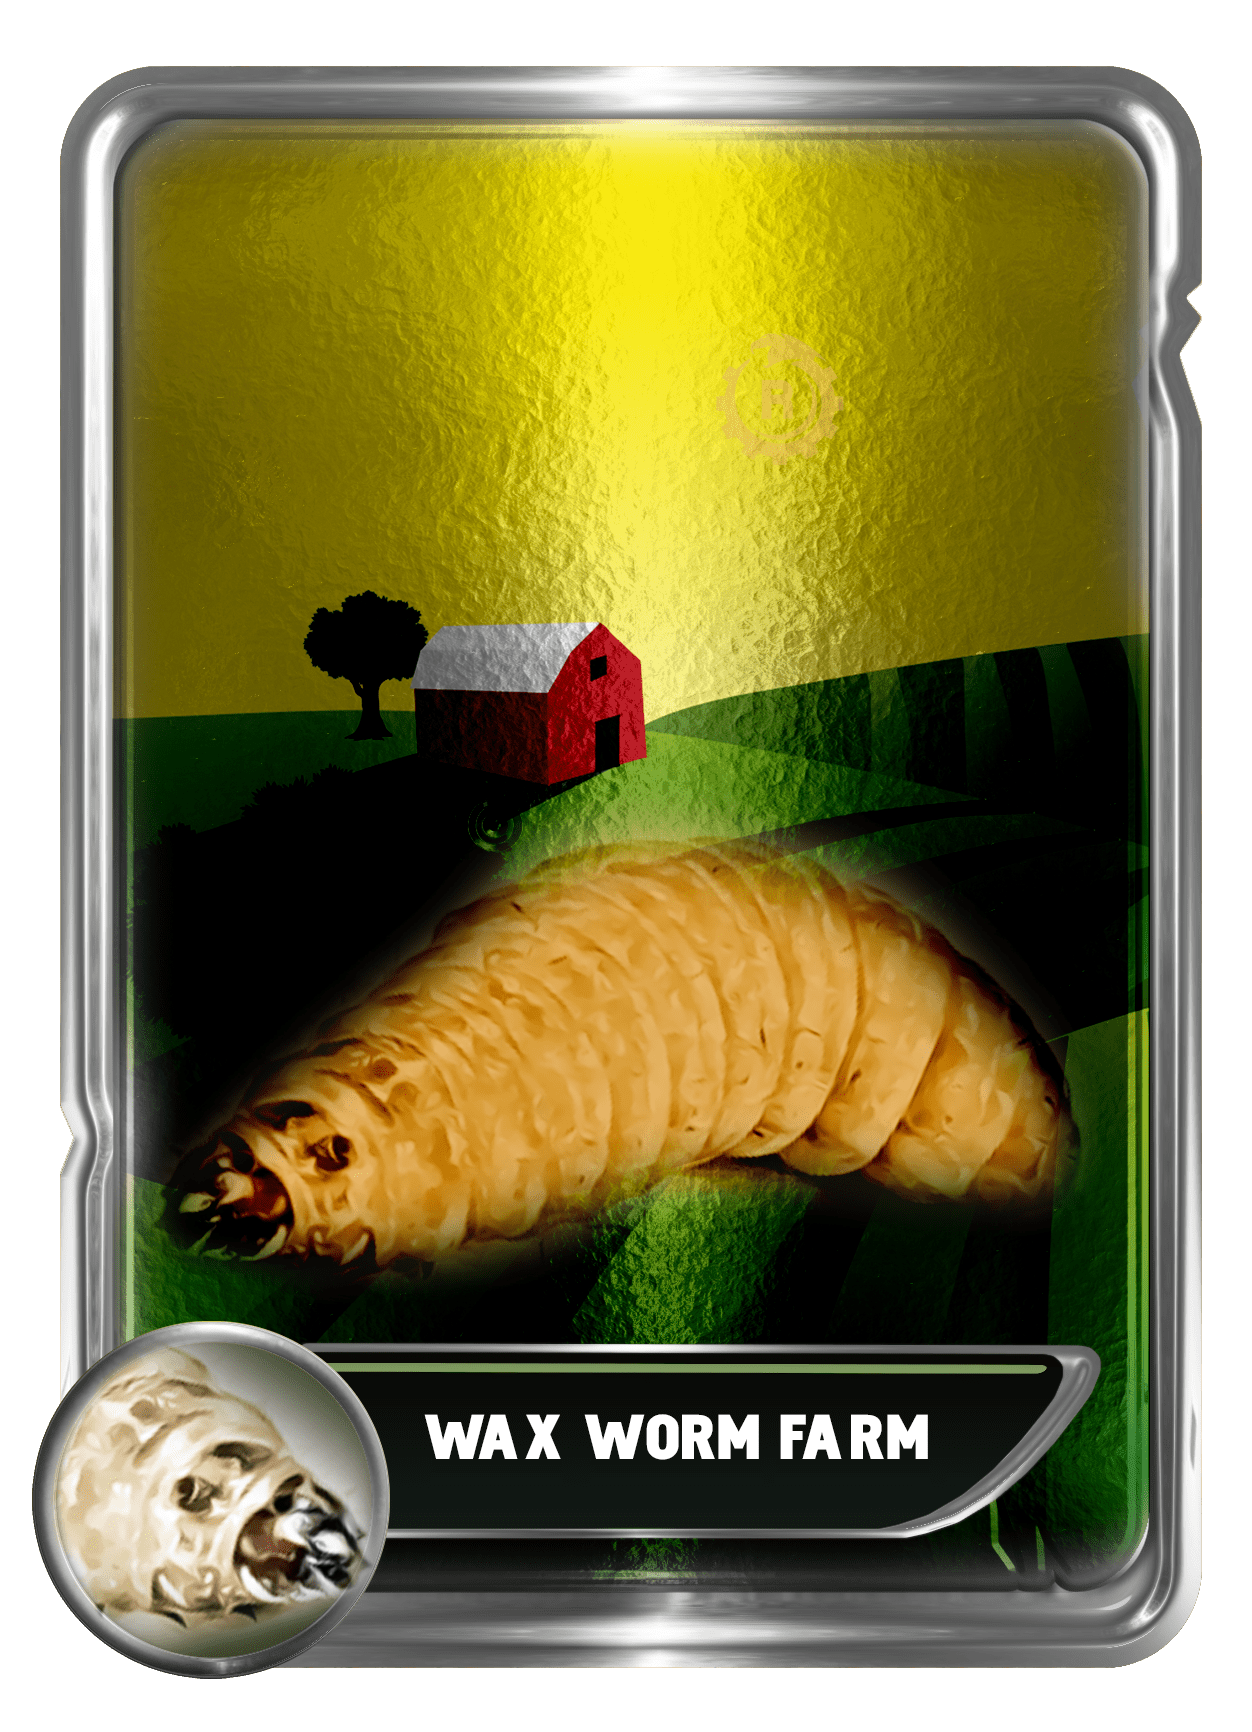 Live Wax Worms, Live Waxworms